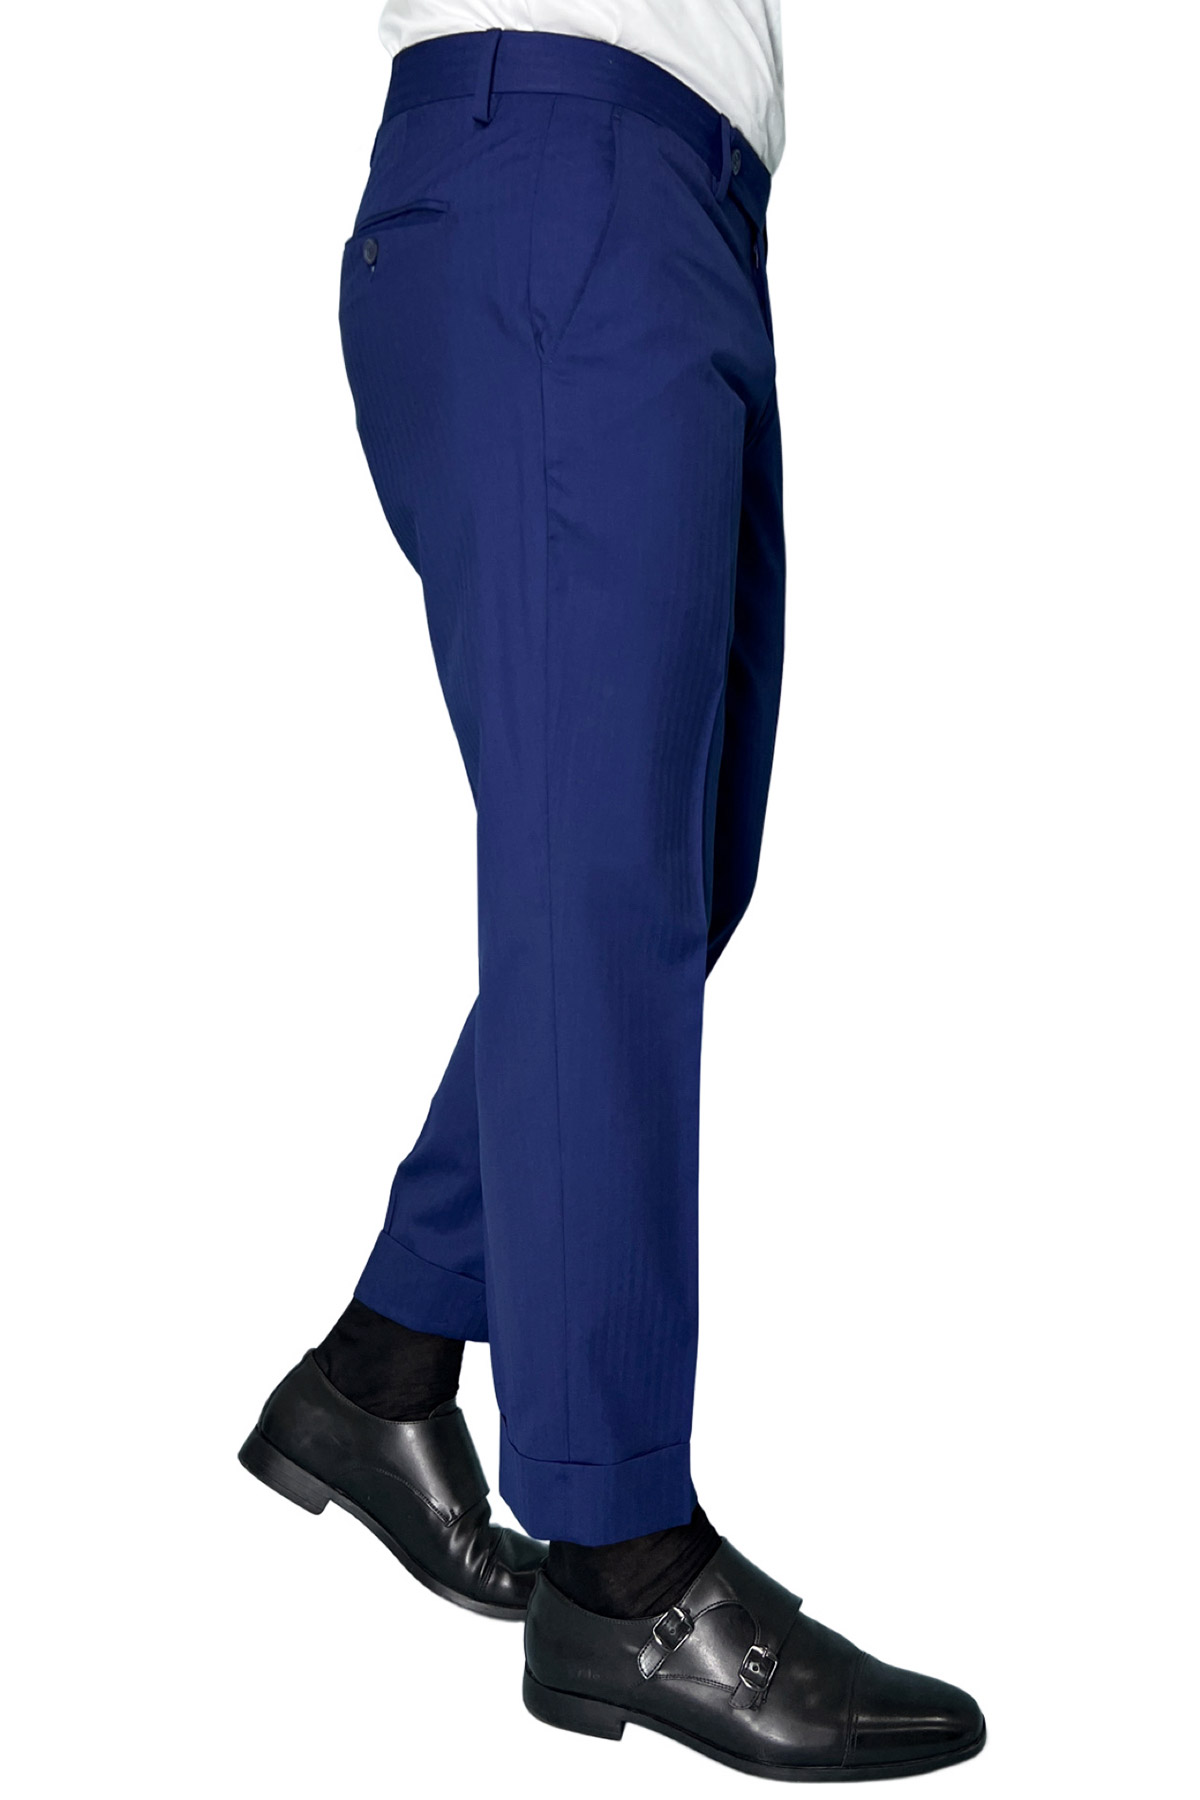 Pantalone uomo royal blu tasca america in fresco lana e seta Solaro Holland & Sherry